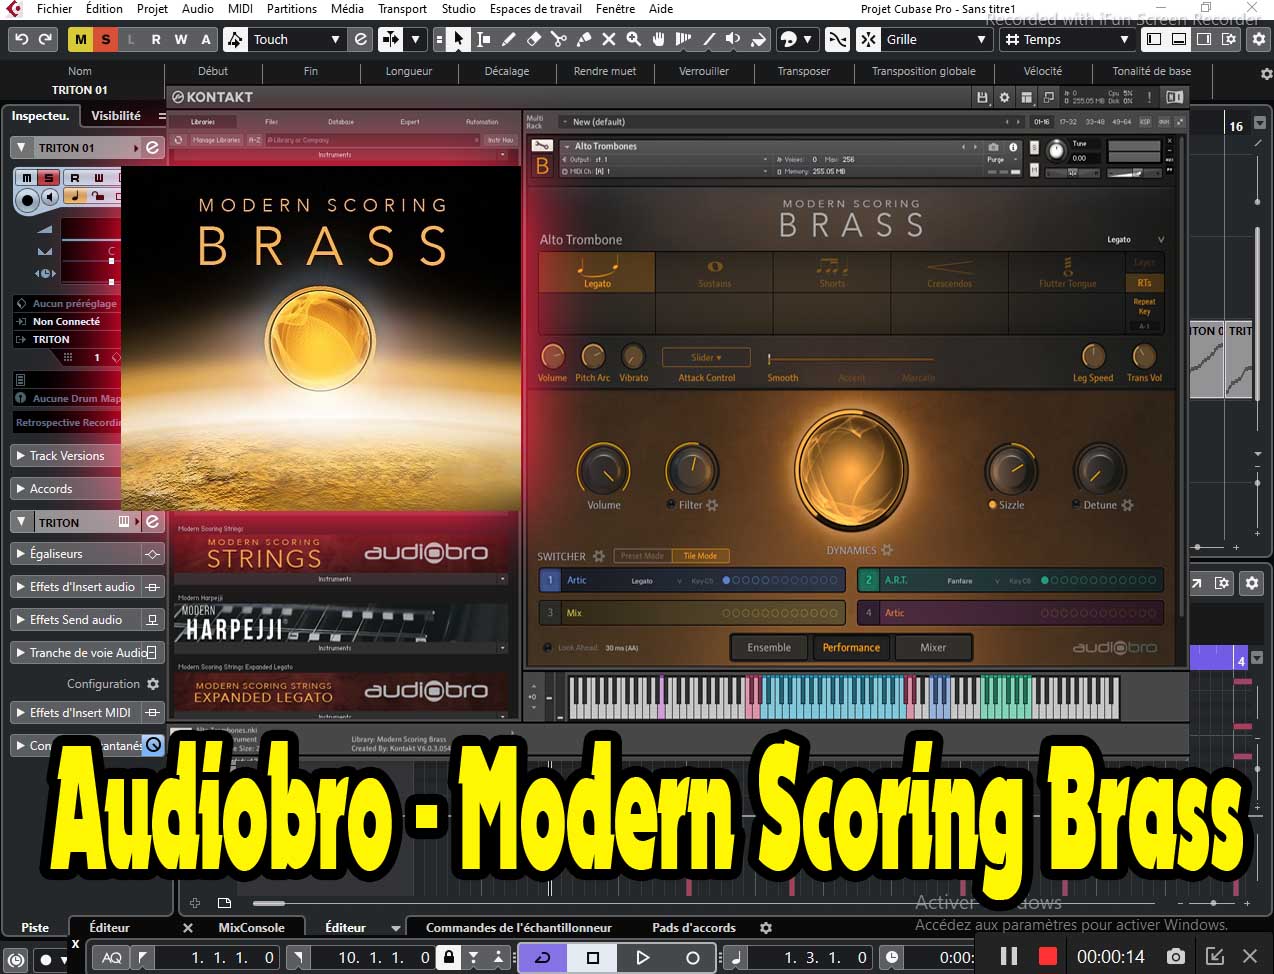 Audiobro - Modern Scoring Brass